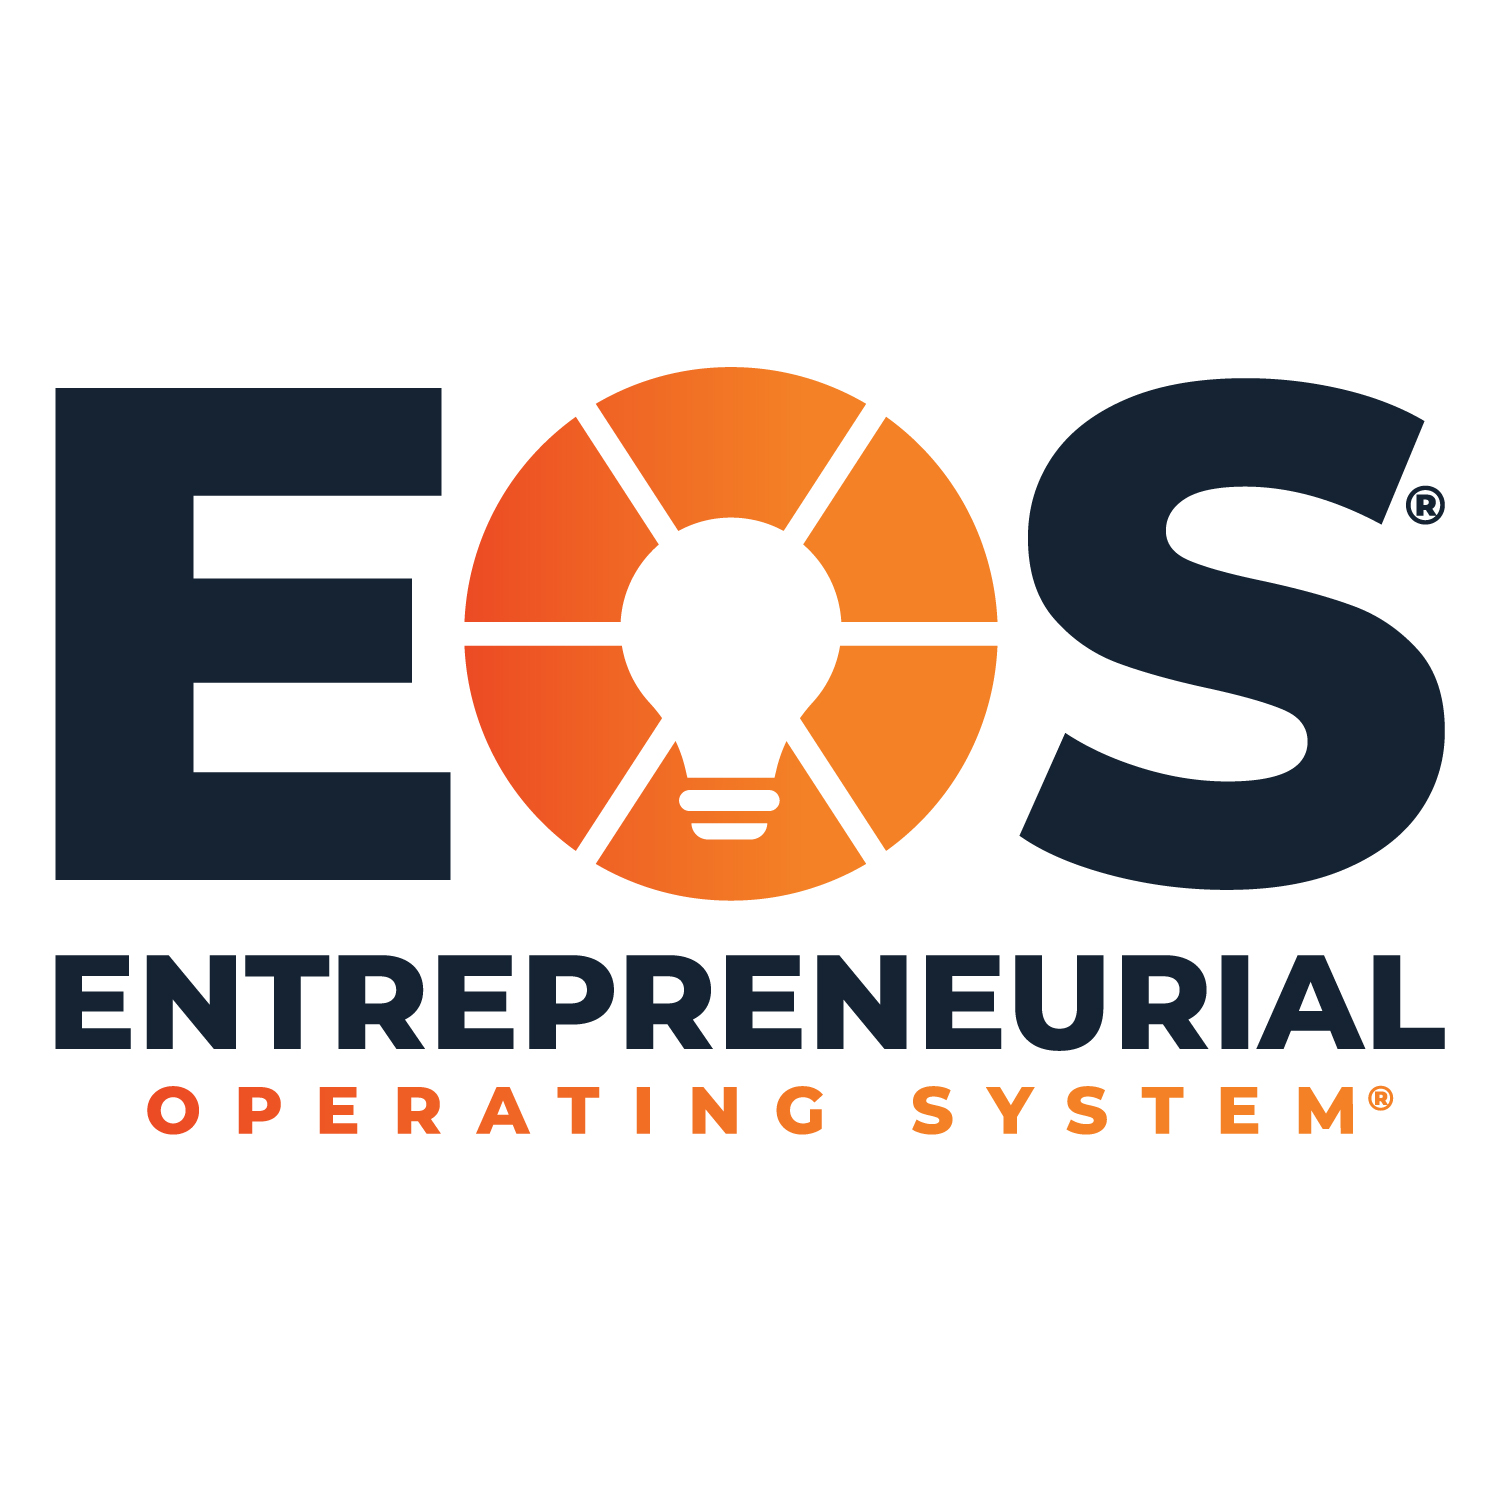 EOS Worldwide (Entrepreneurial Operating System)